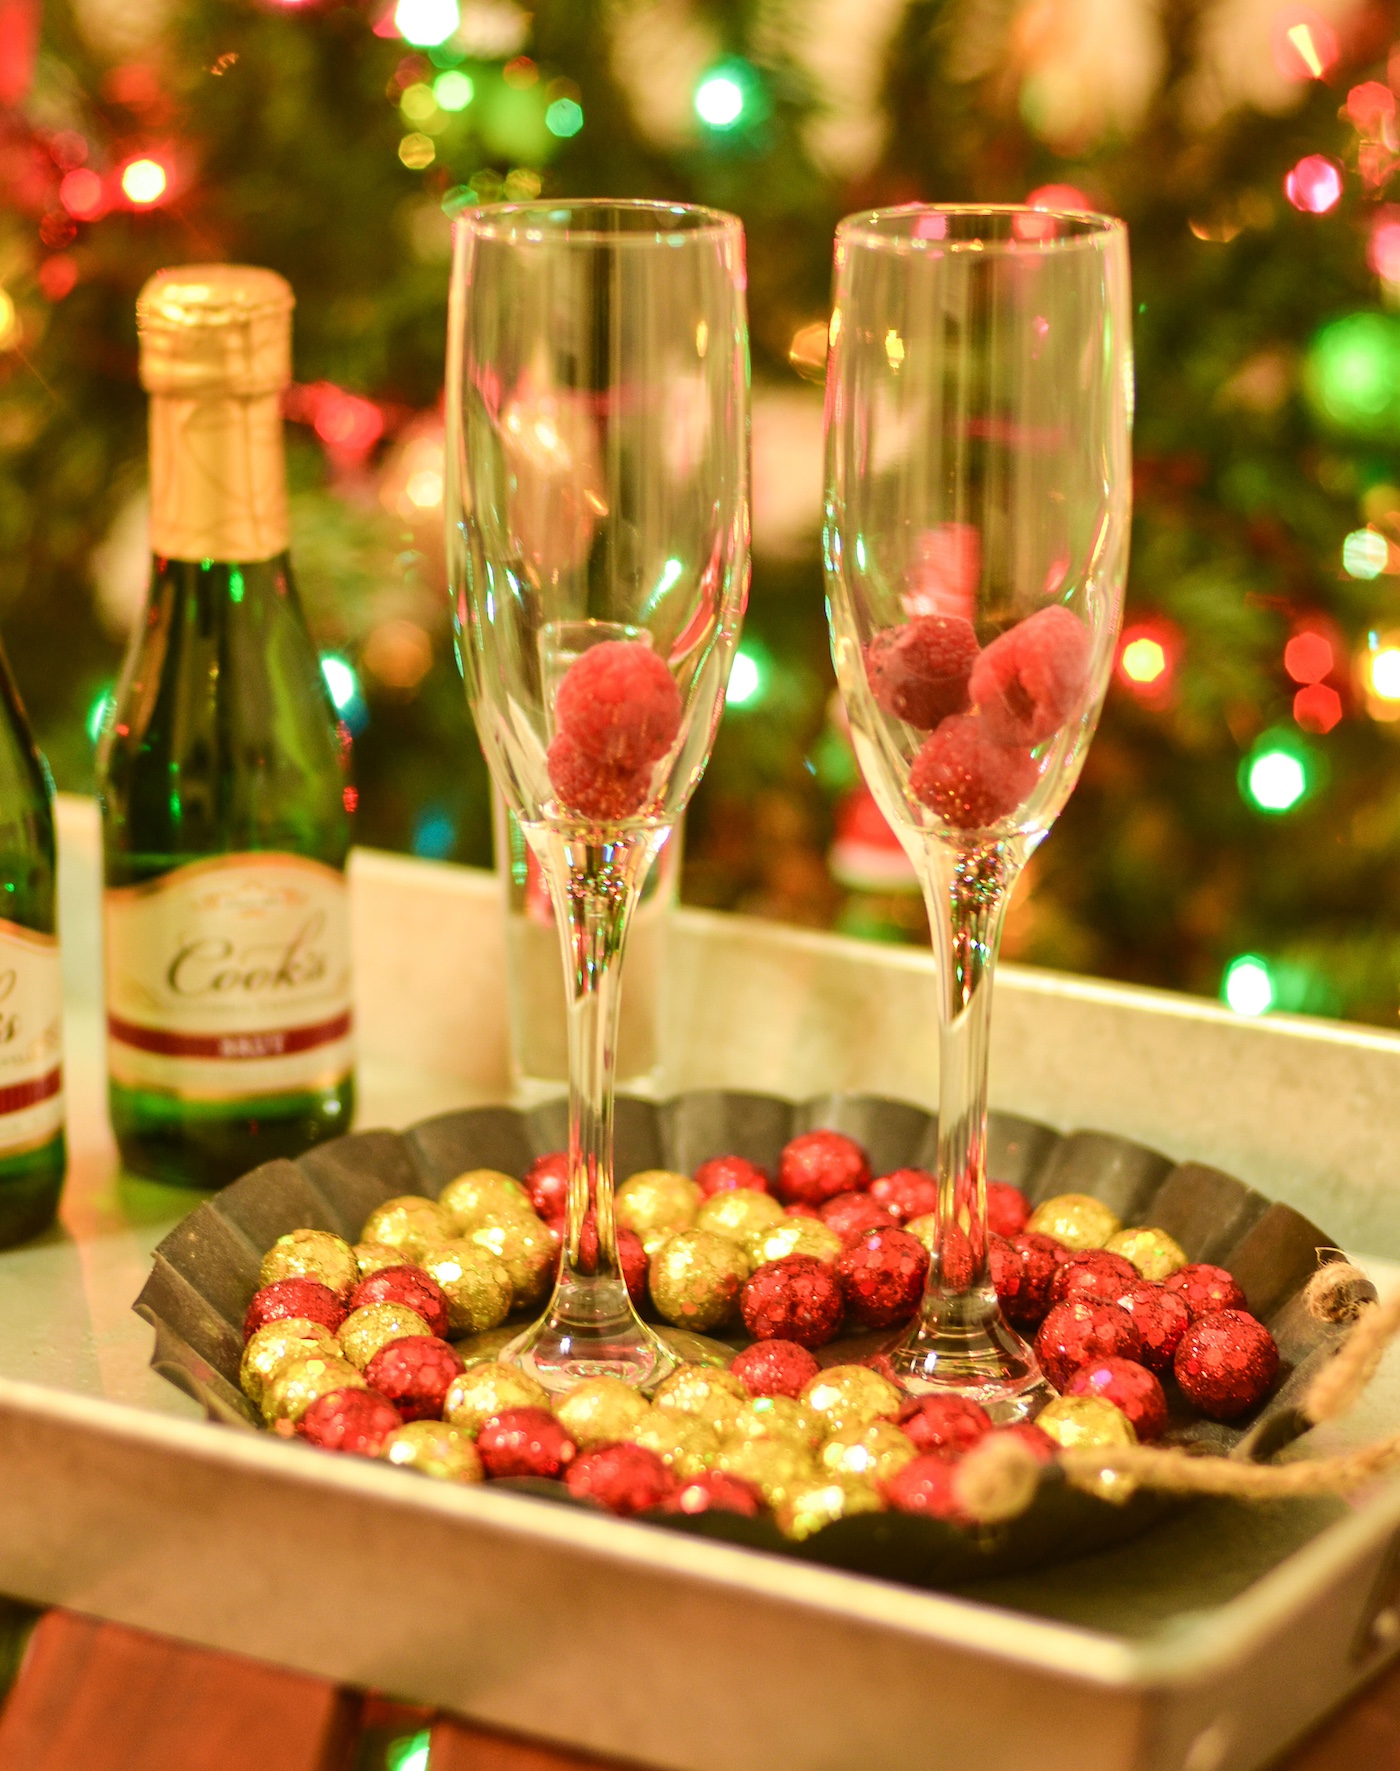 Raspberries added to champagne glasses